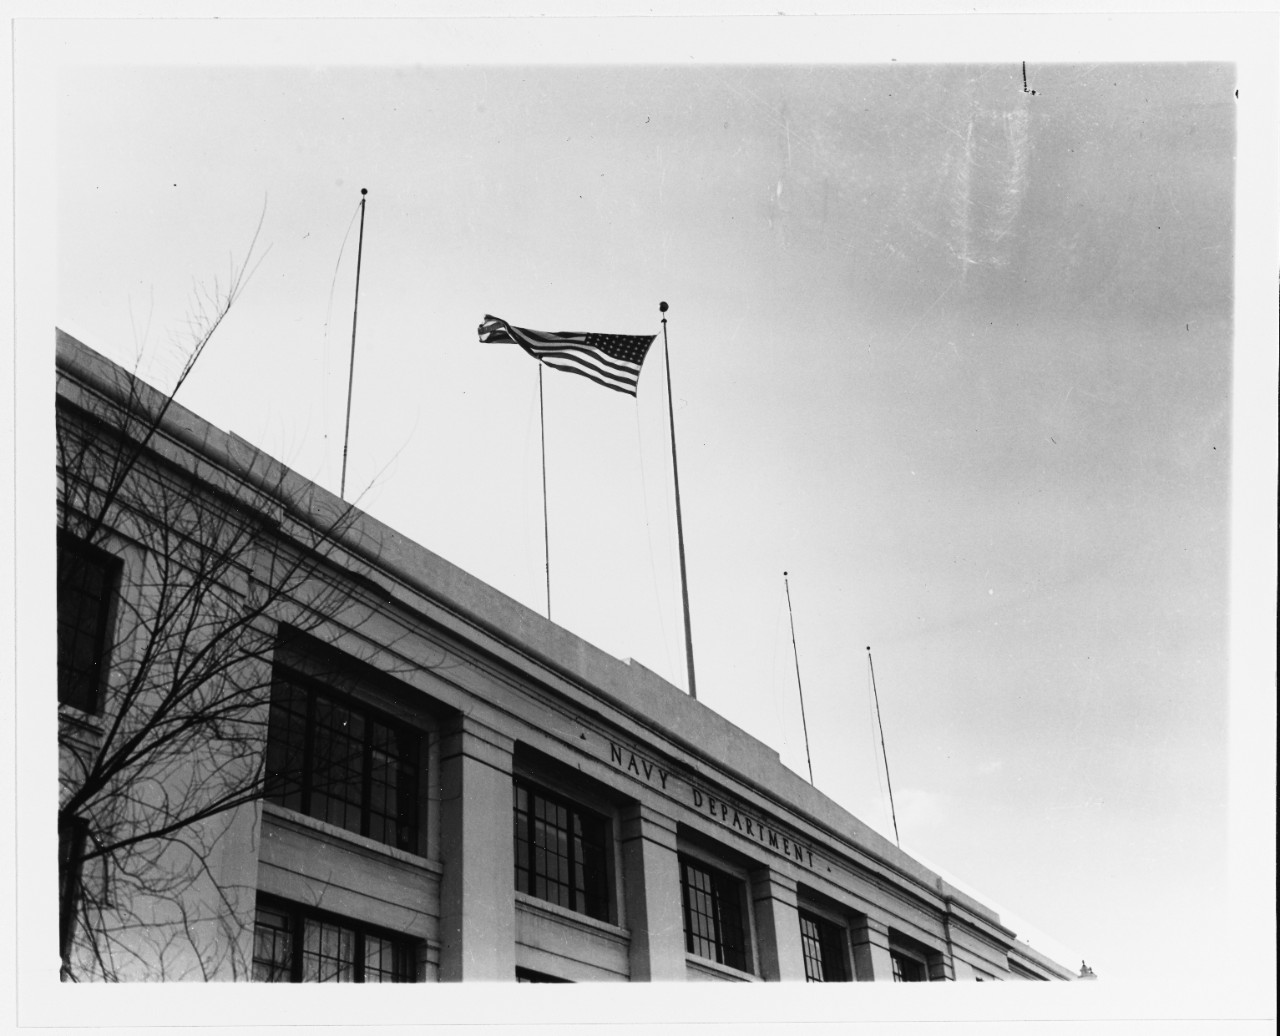 Main Navy Building, Washington, D.C.